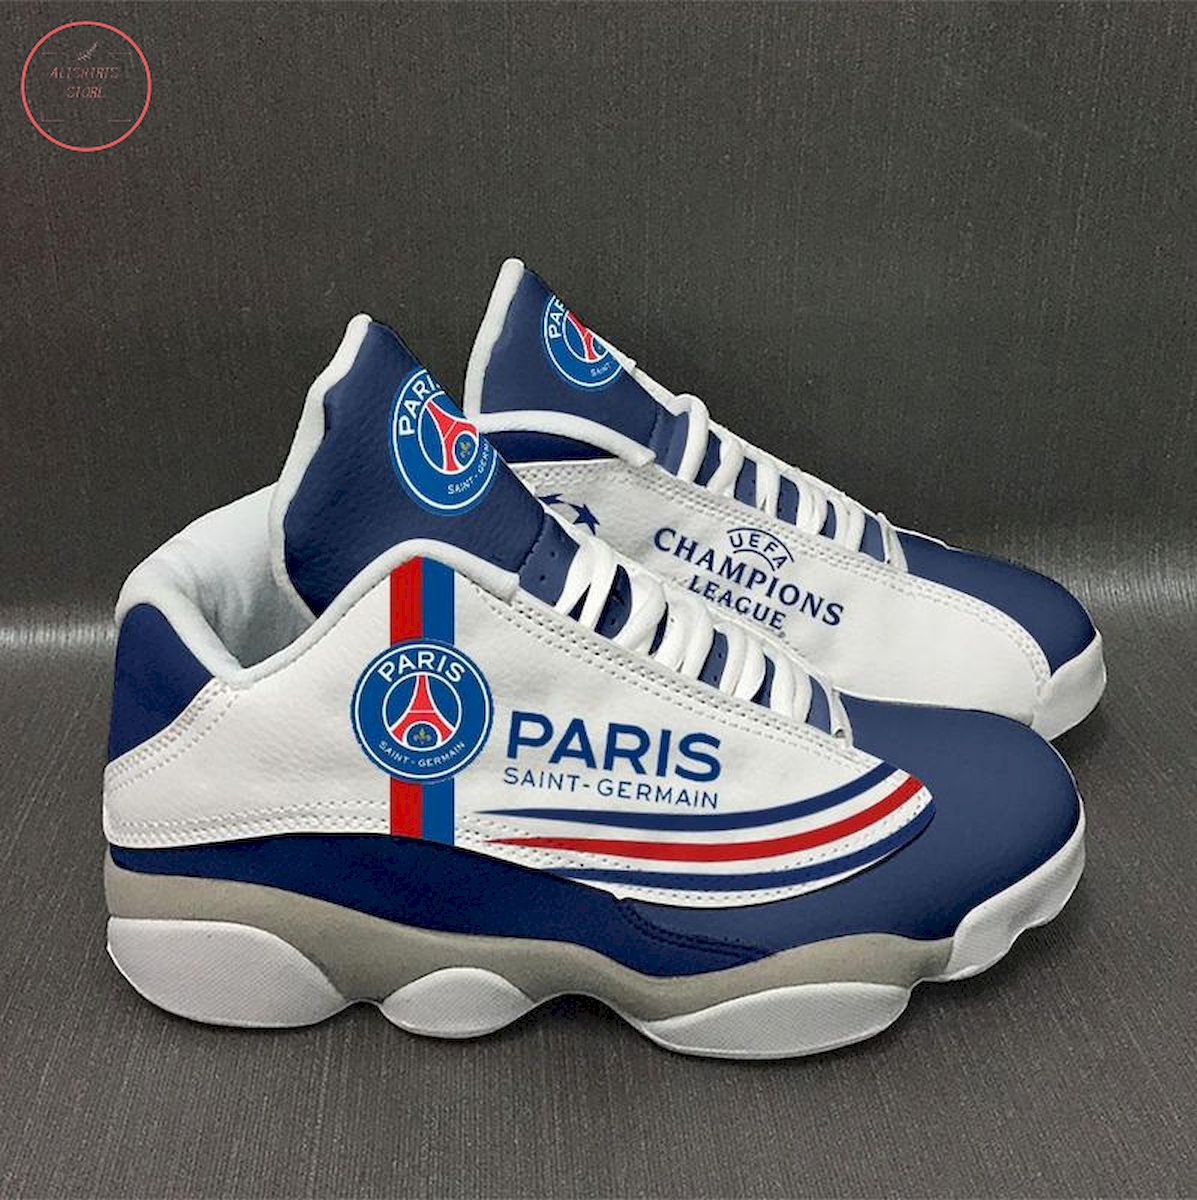 Paris Saint-Germain Air Jordan 13 Sneaker Shoes